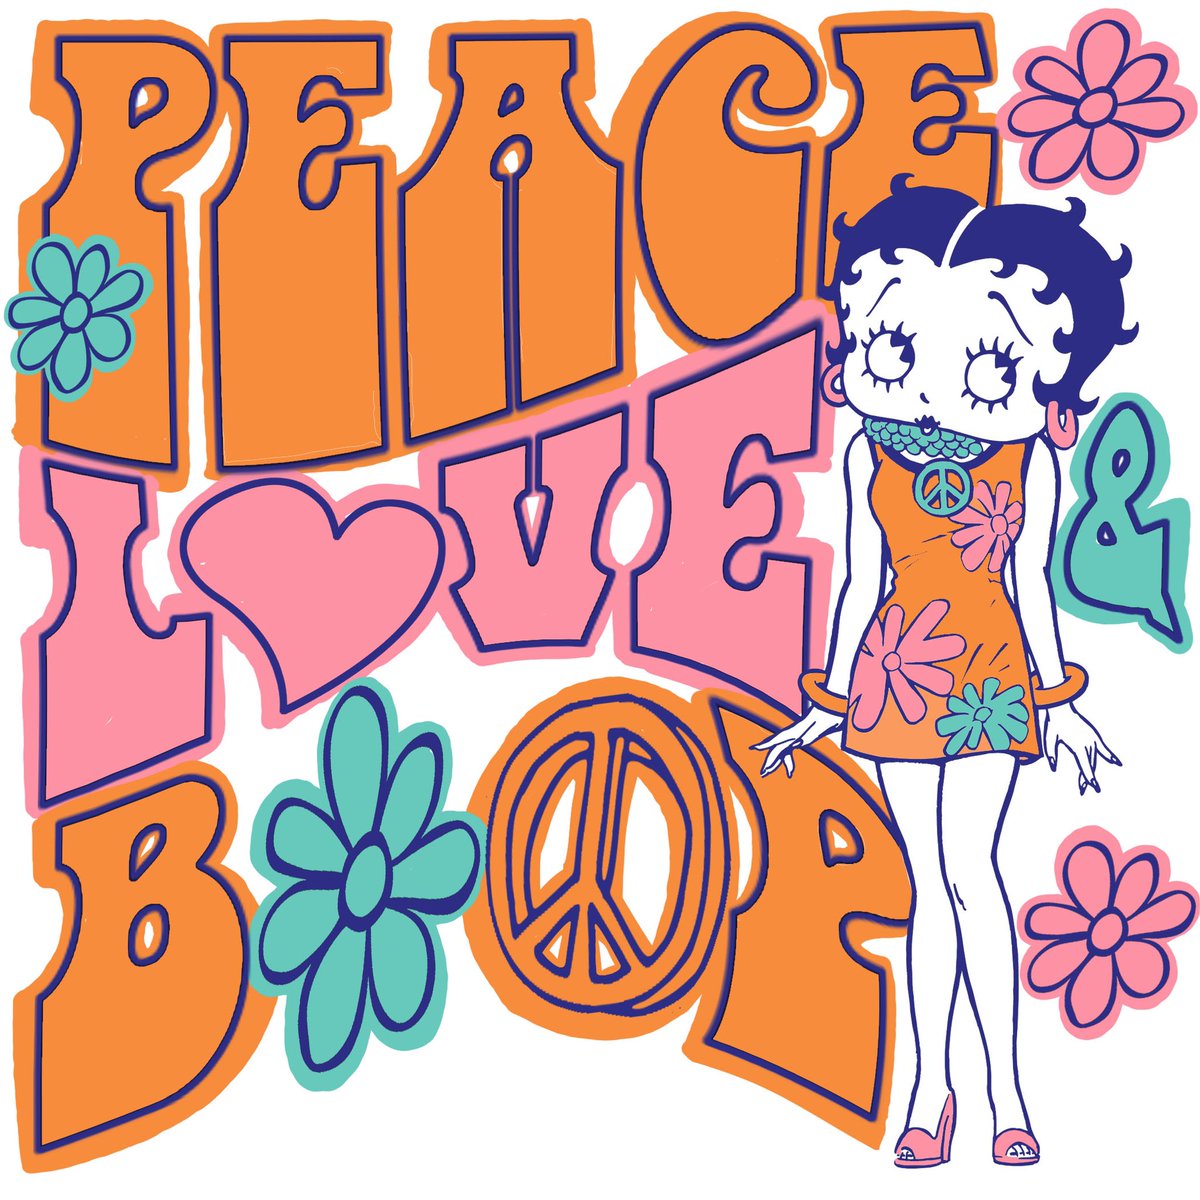 Happy #WorldPeaceDay! ☮️🥰
#internationaldayofpeace #bettyboop #booplove